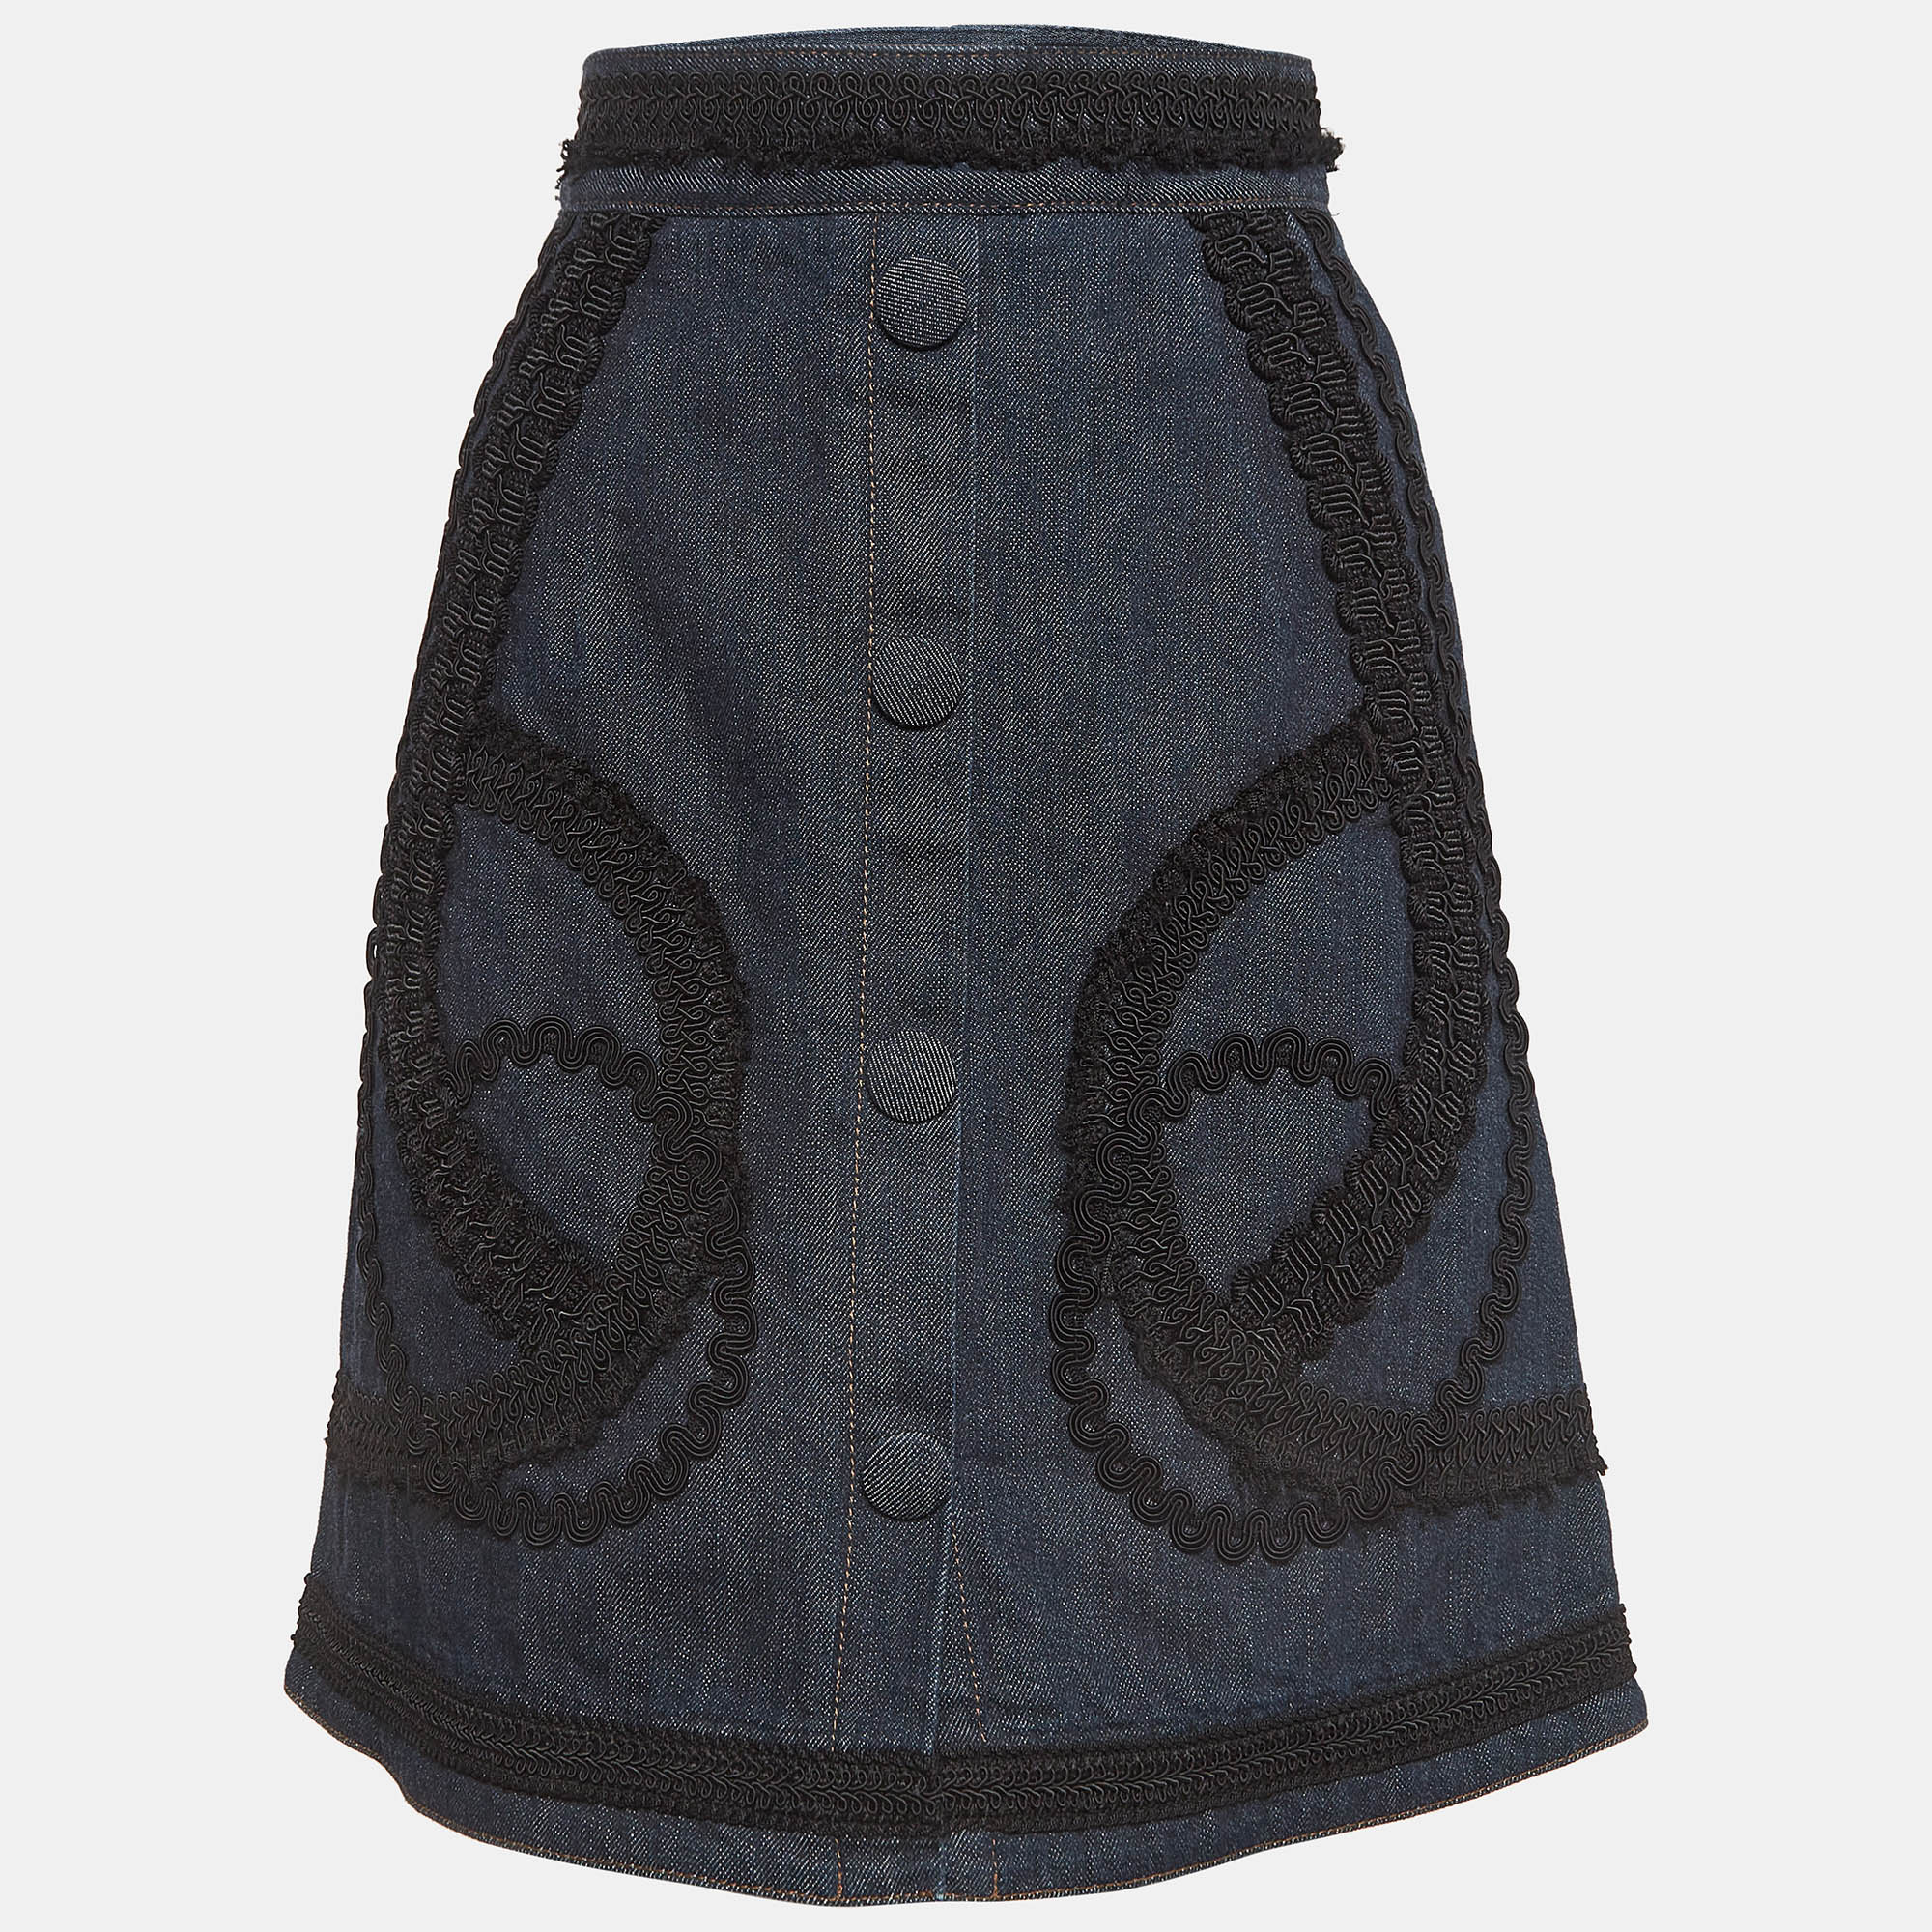 Dolce & gabbana blue lace embroidered denim skirt s